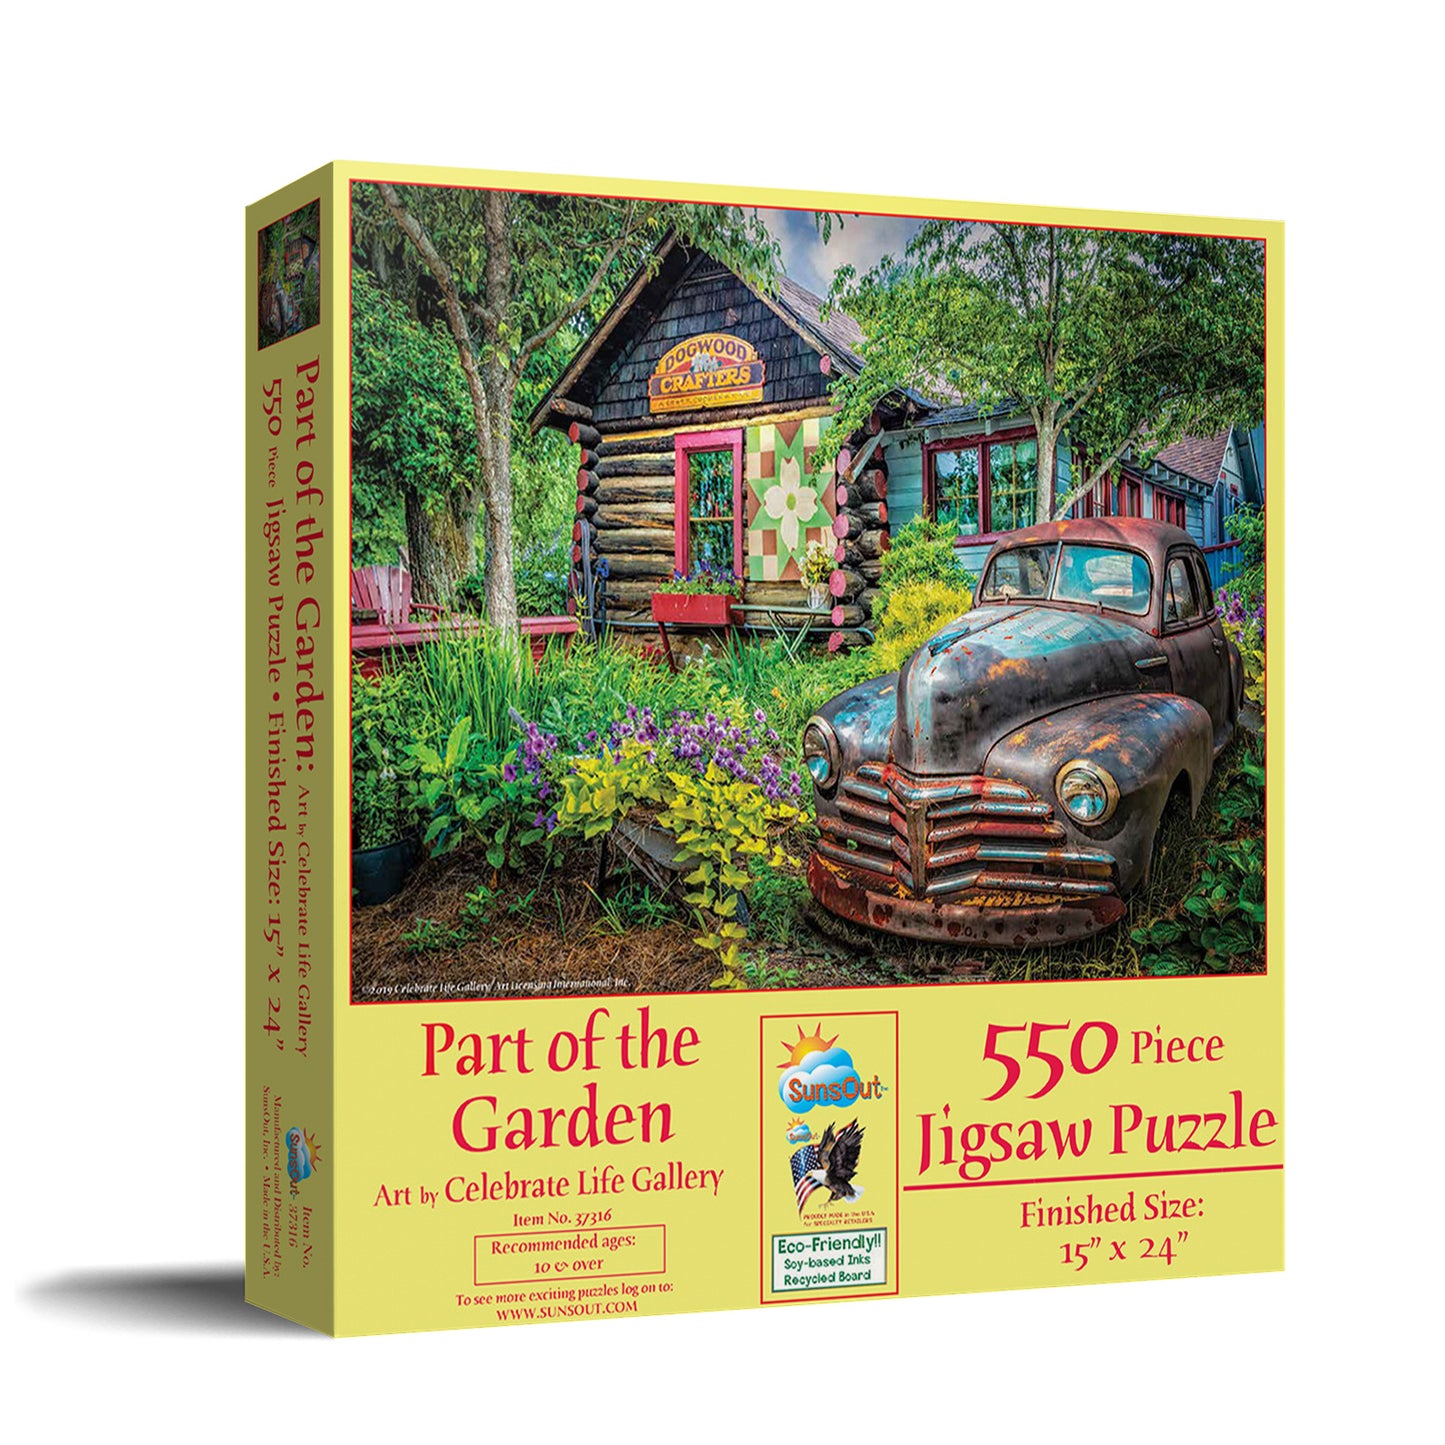 Part of the Garden - 550 Piece Jigsaw Puzzle